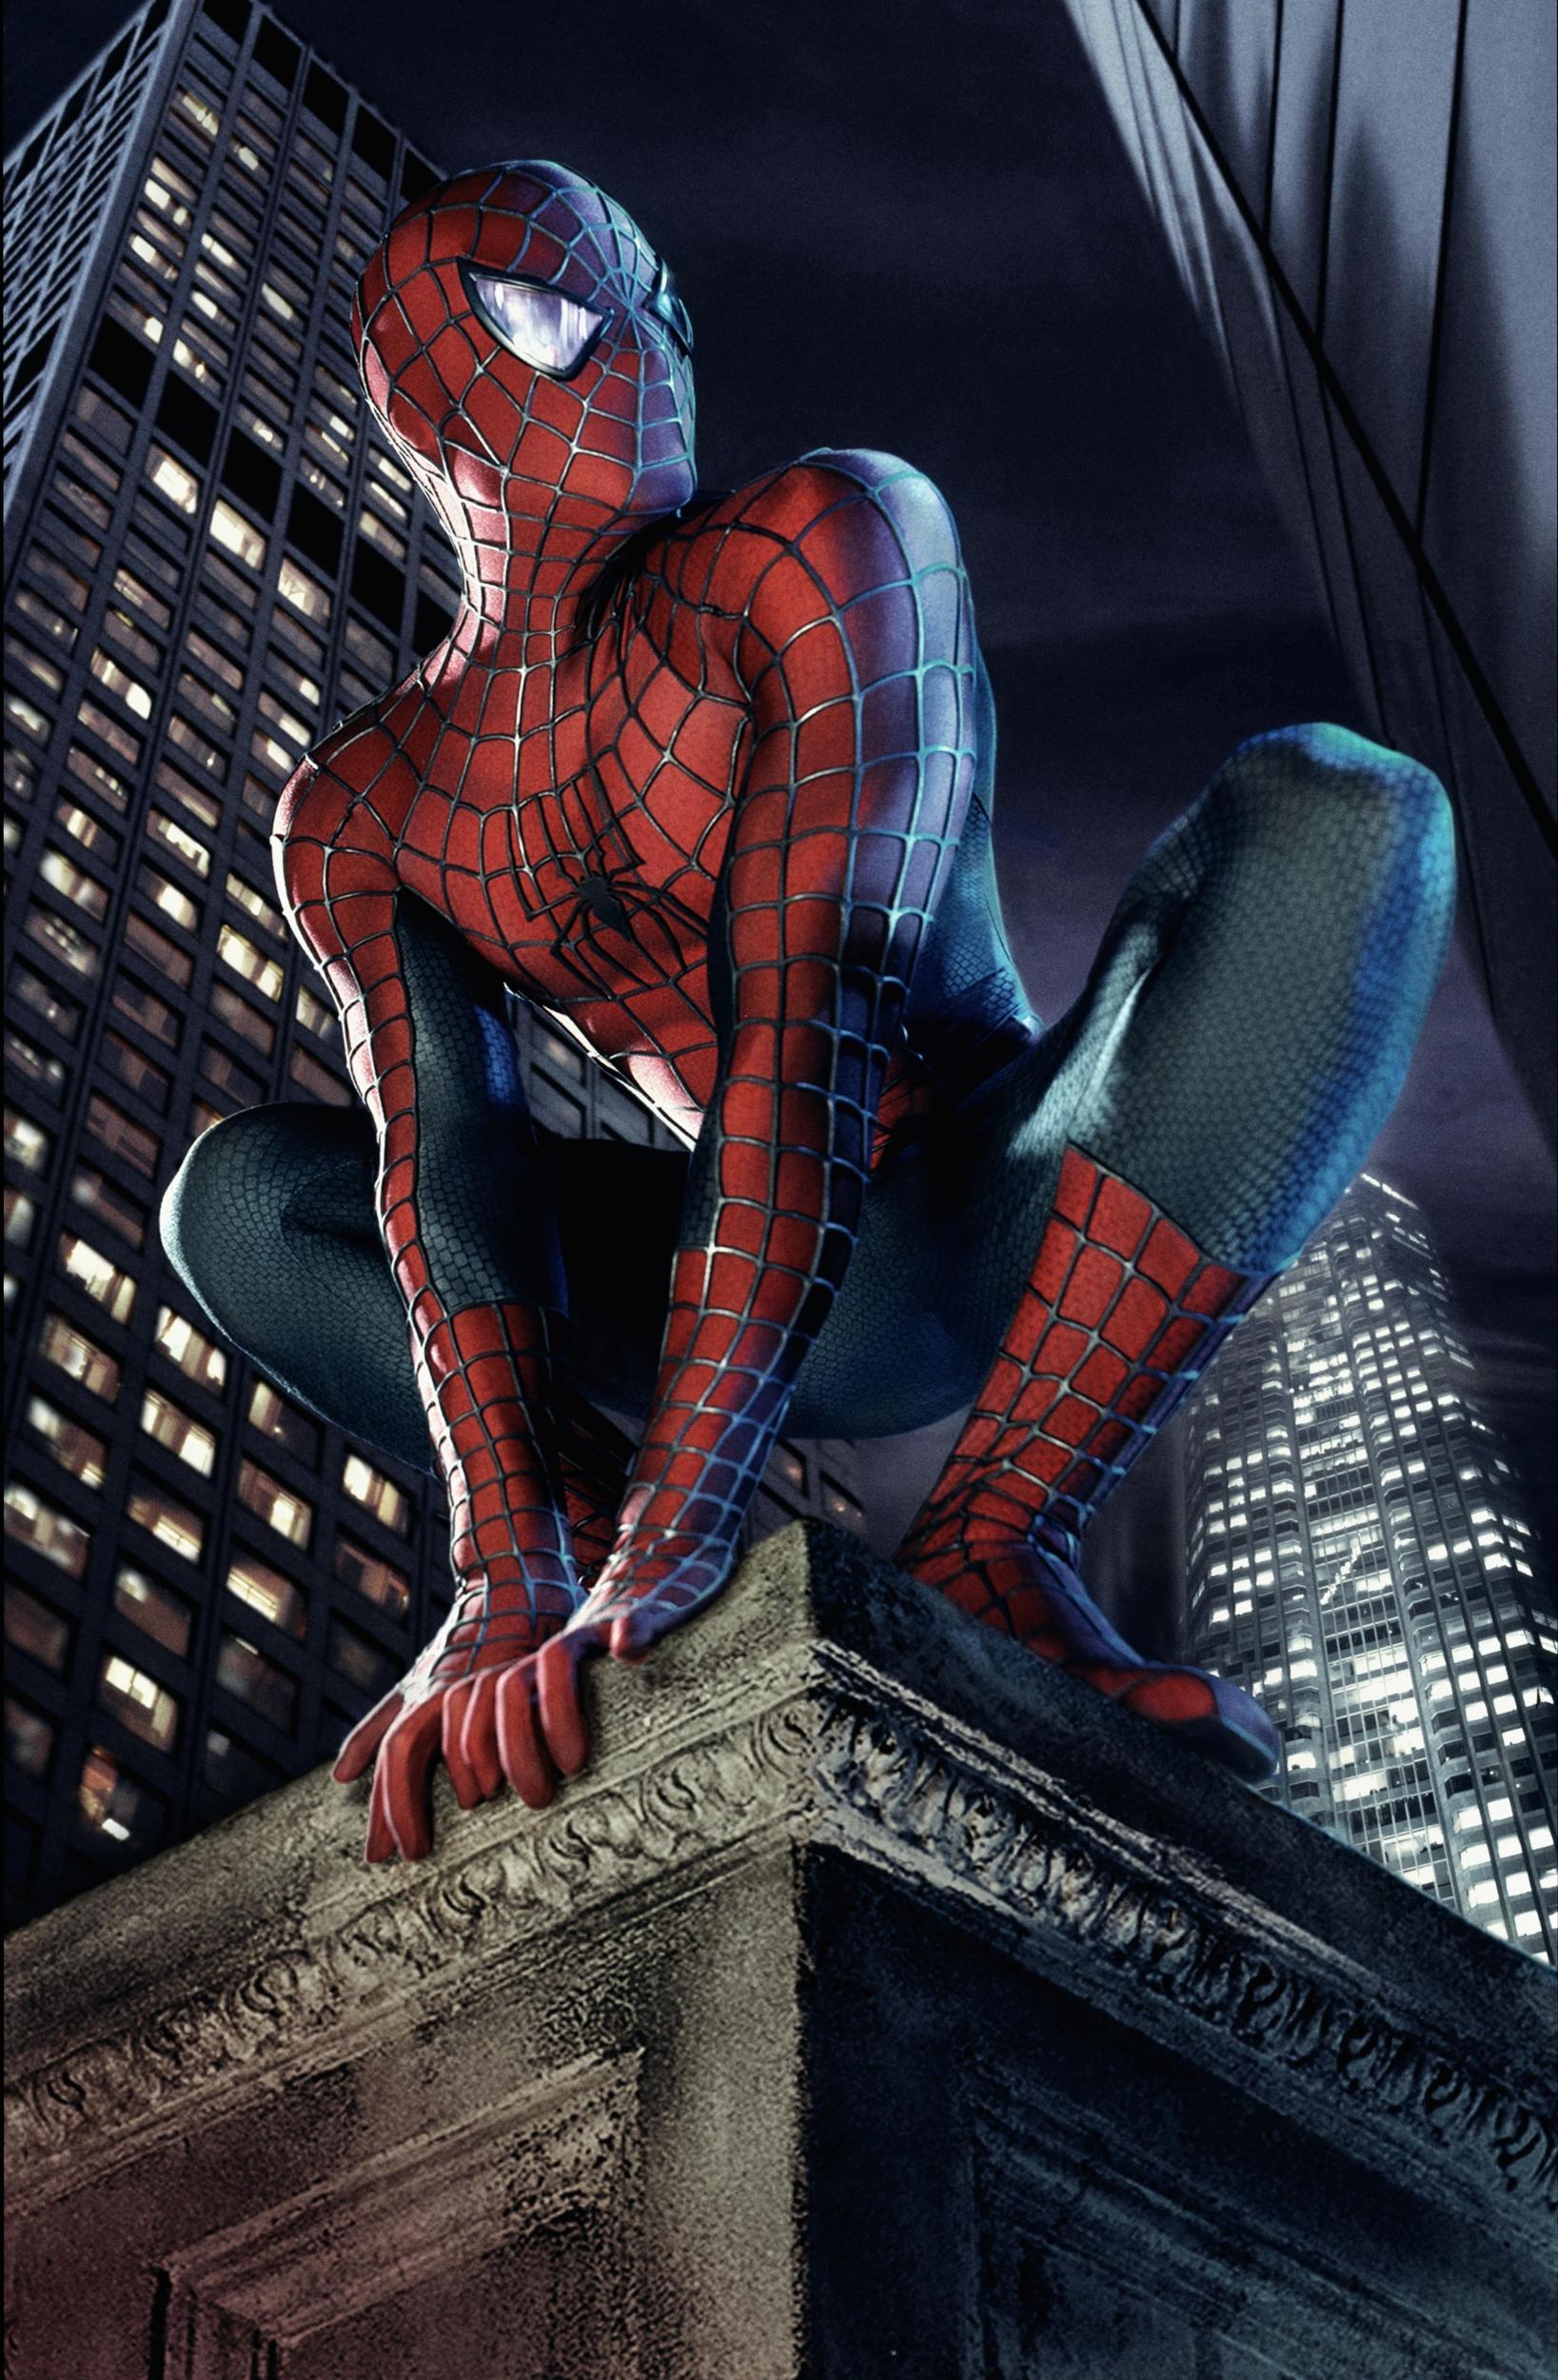 Spider Man Uniform (Raimi Films). Spider Man Films